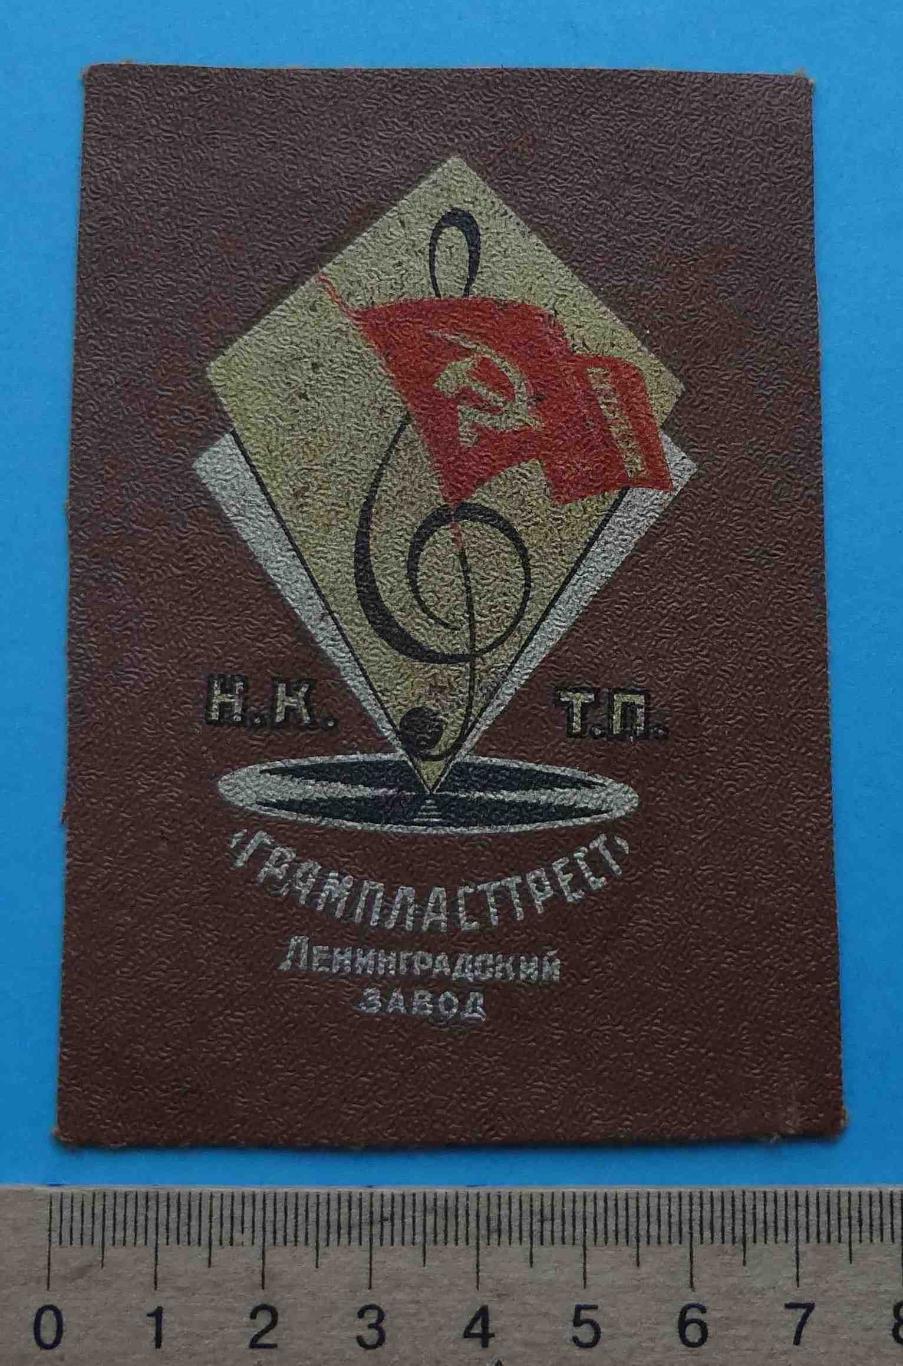 Эмблема с патефона Н.К.Т.П. Грампласттрест Ленинградский завод